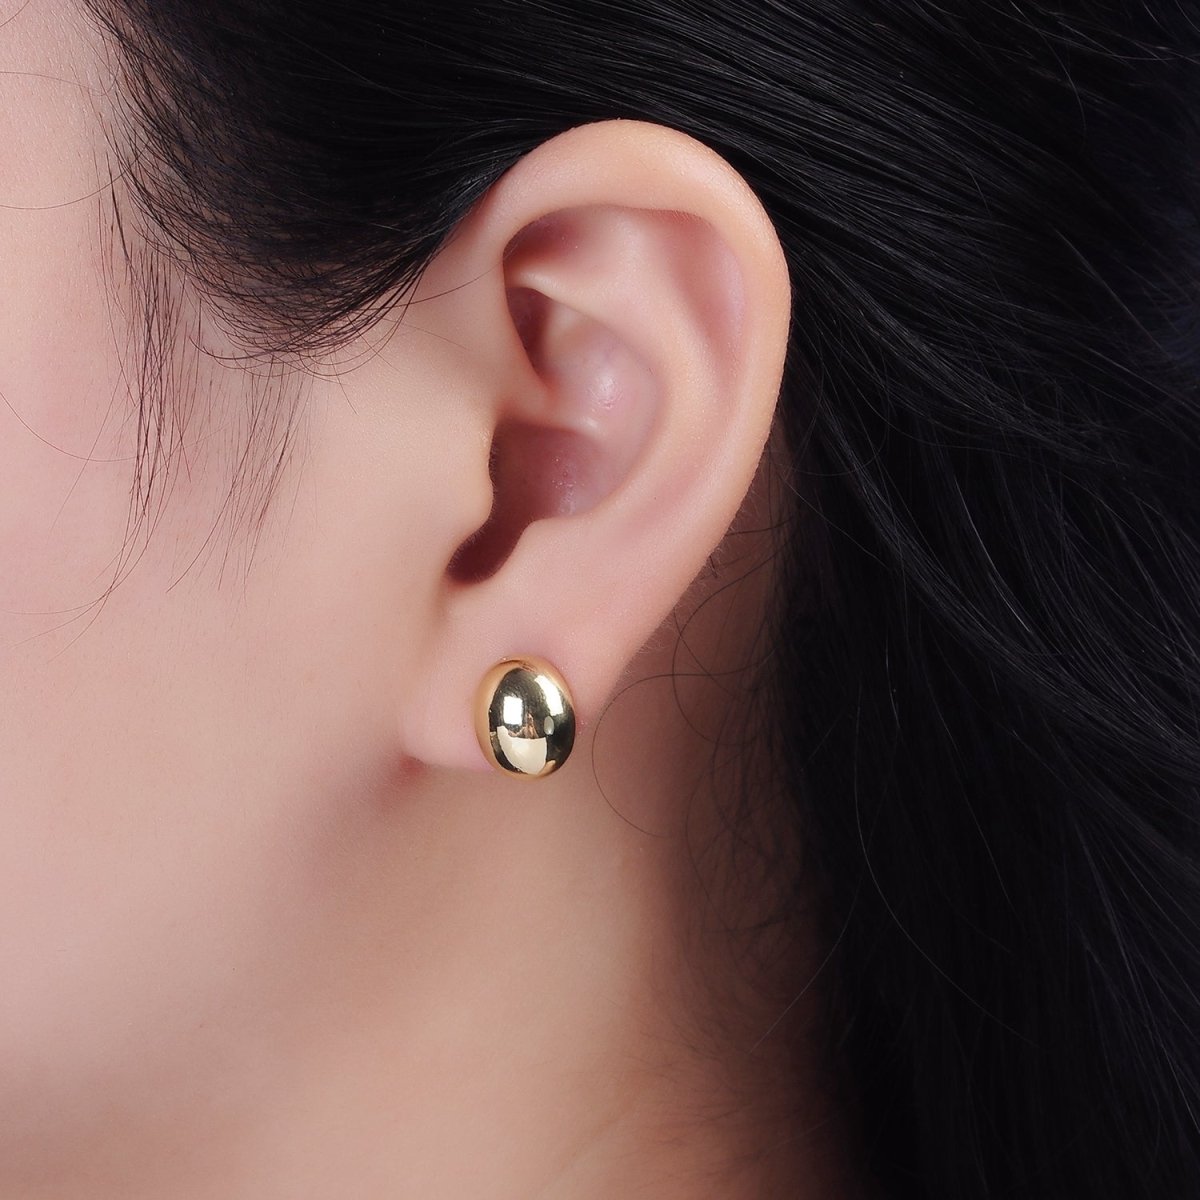 14K Gold Filled 12mm Oval Bean Dome Minimalist Stud Earrings | V294 - DLUXCA